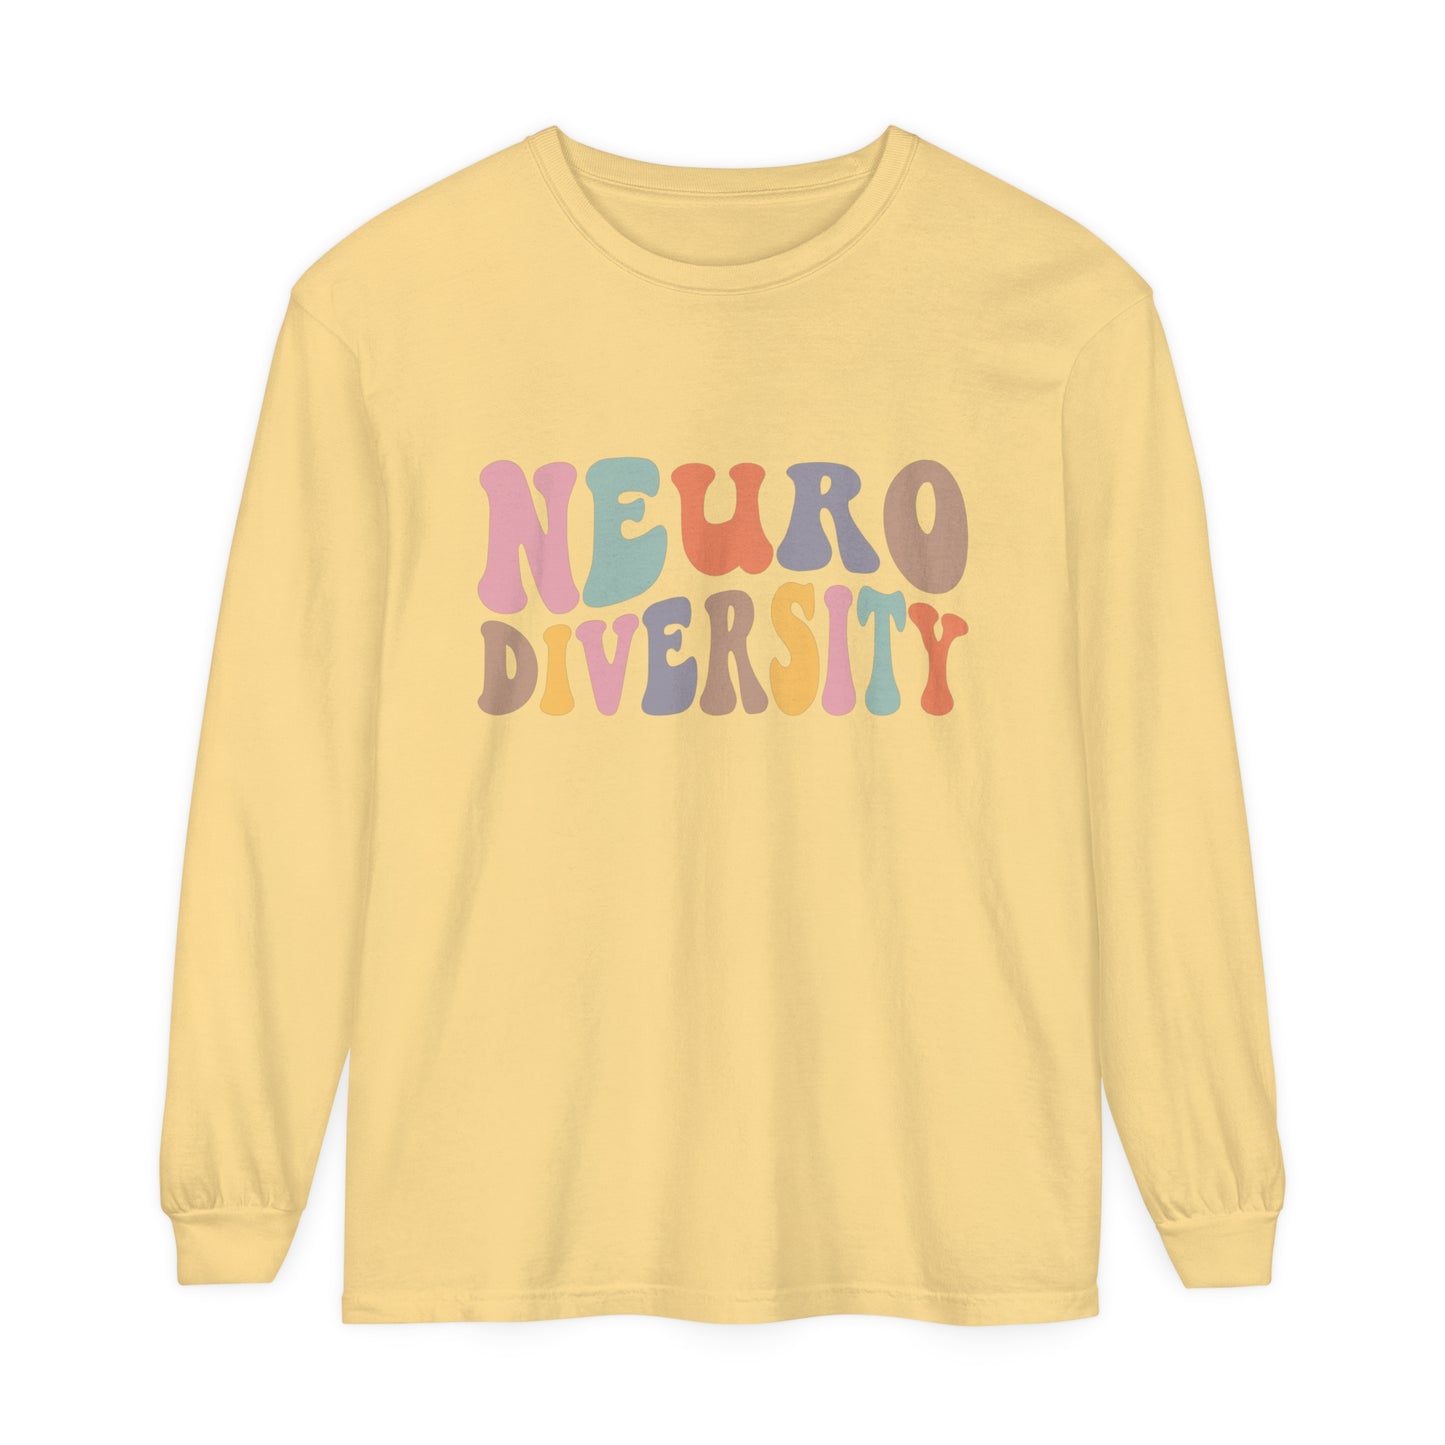 Neurodiversity Women's Long Sleeve T-Shirt